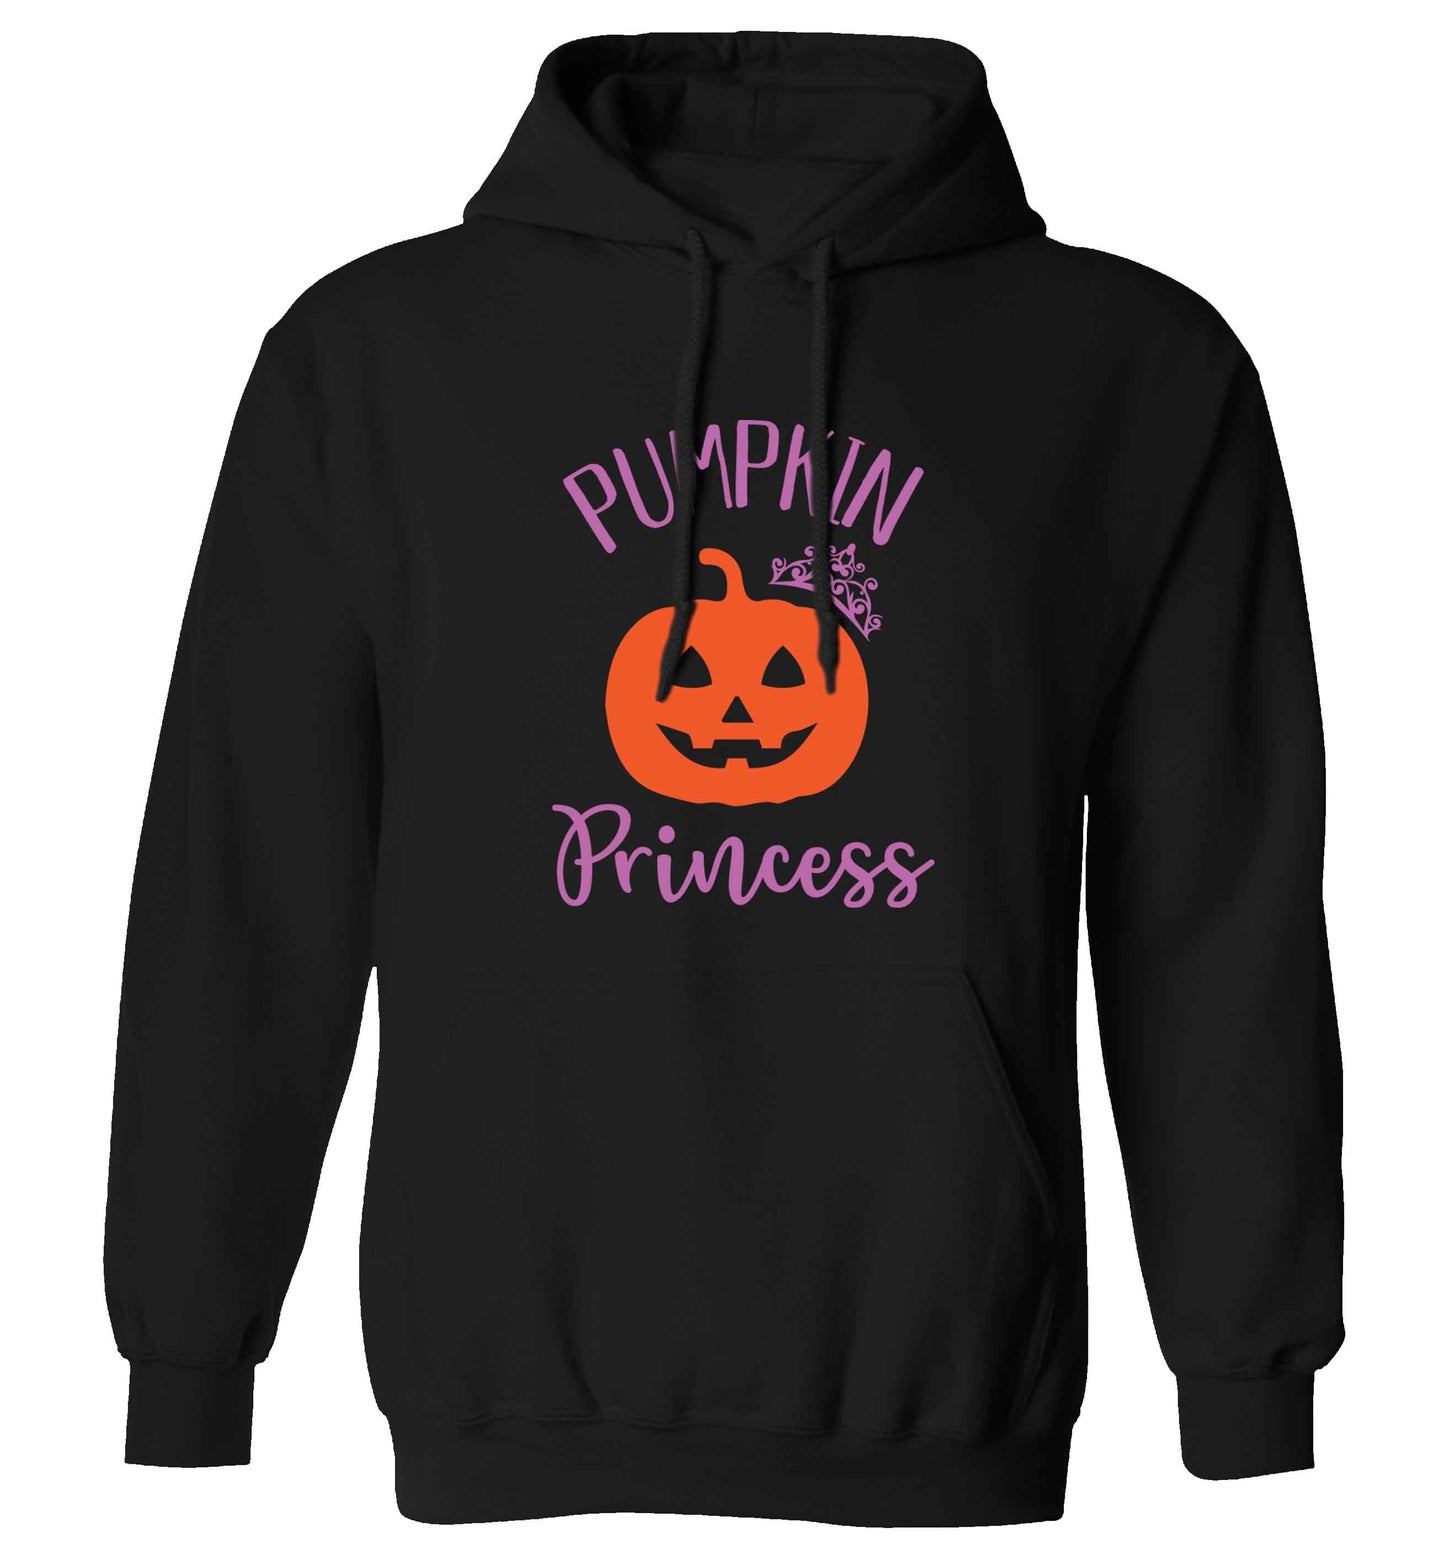 Happiness Pumpkin Spice adults unisex black hoodie 2XL